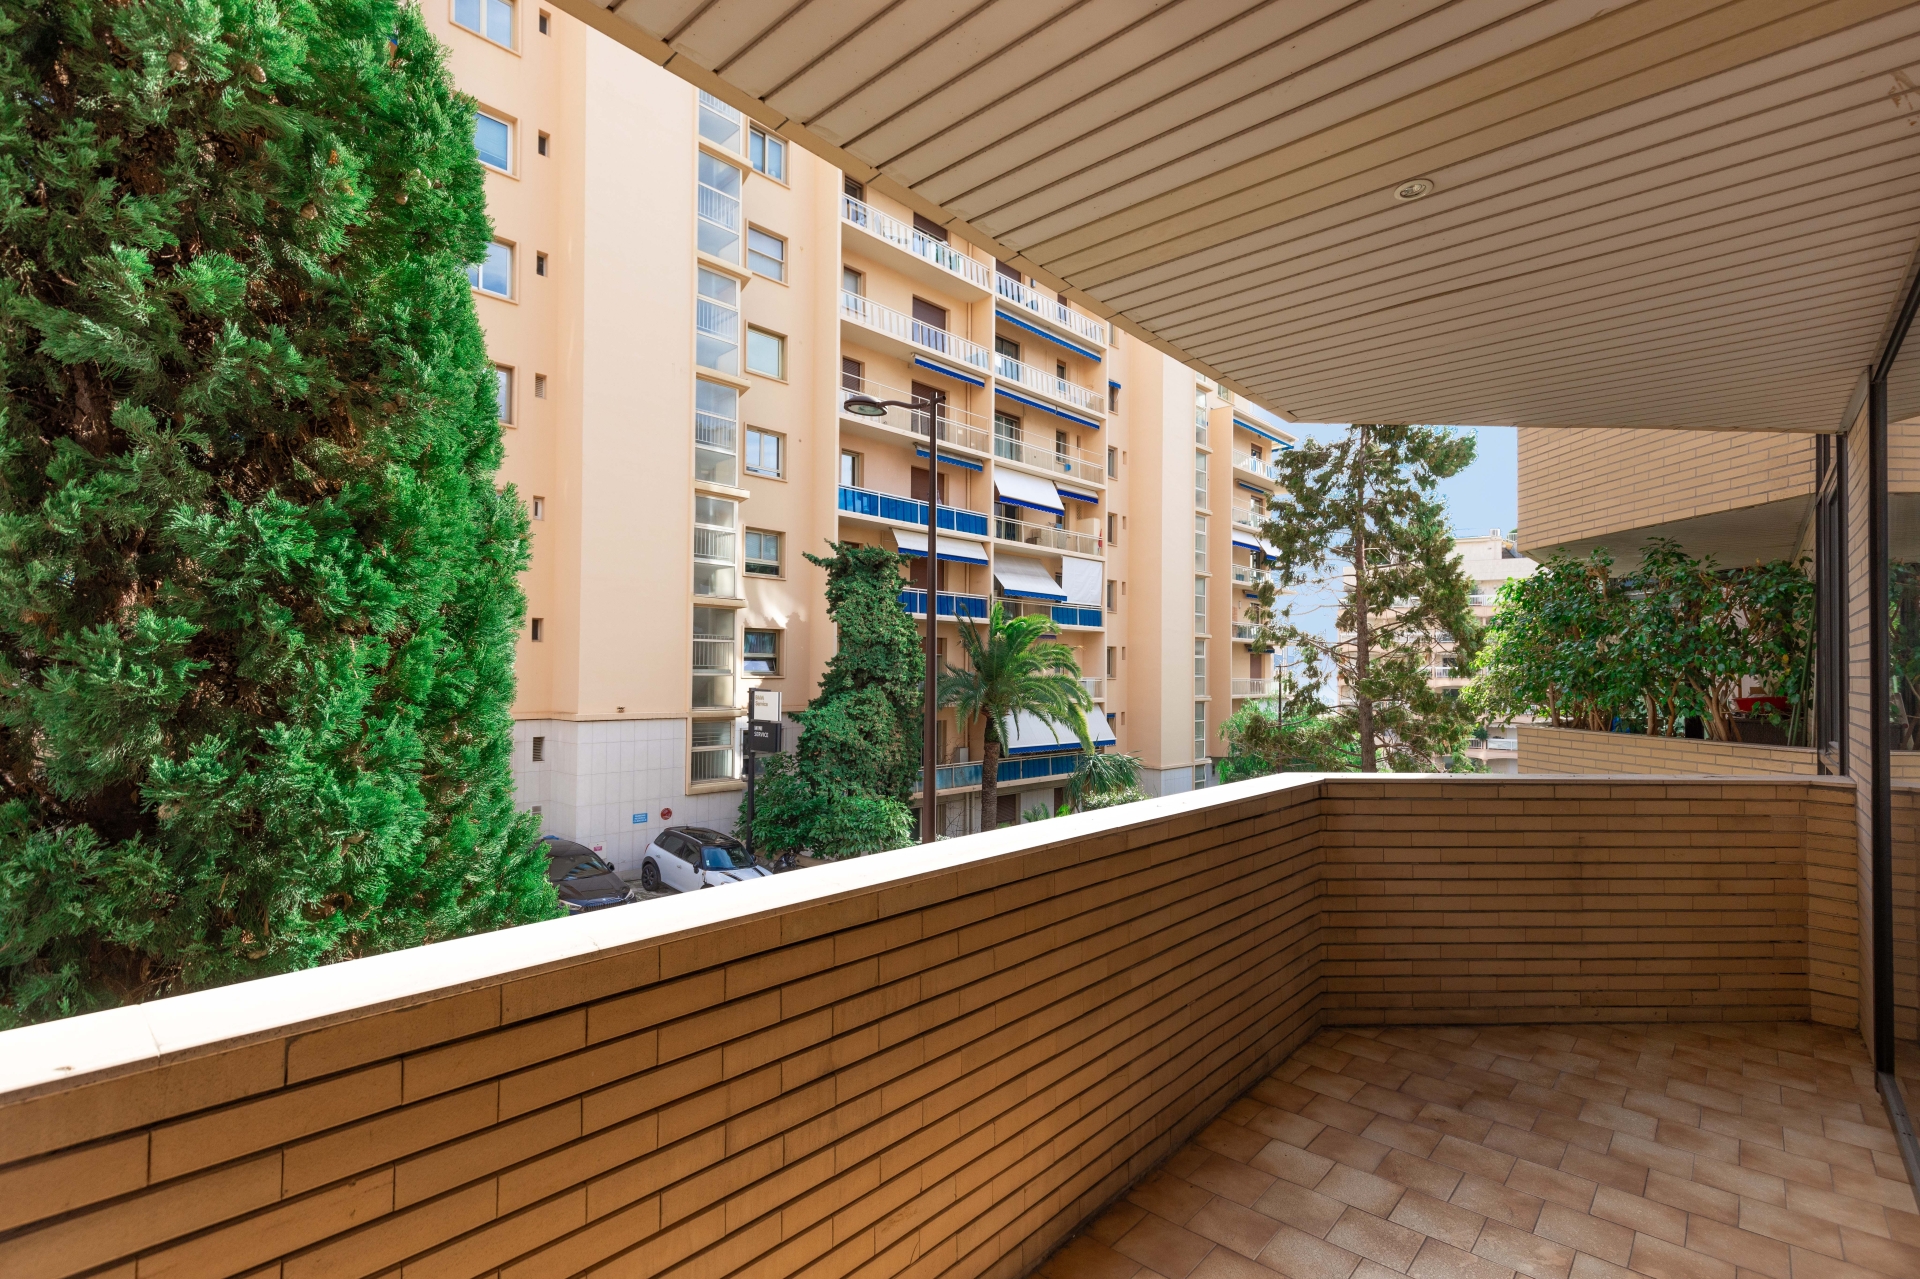 Dotta 2 rooms apartment for sale - SAINT ANDRE - Monte-Carlo - Monaco - img074a8620